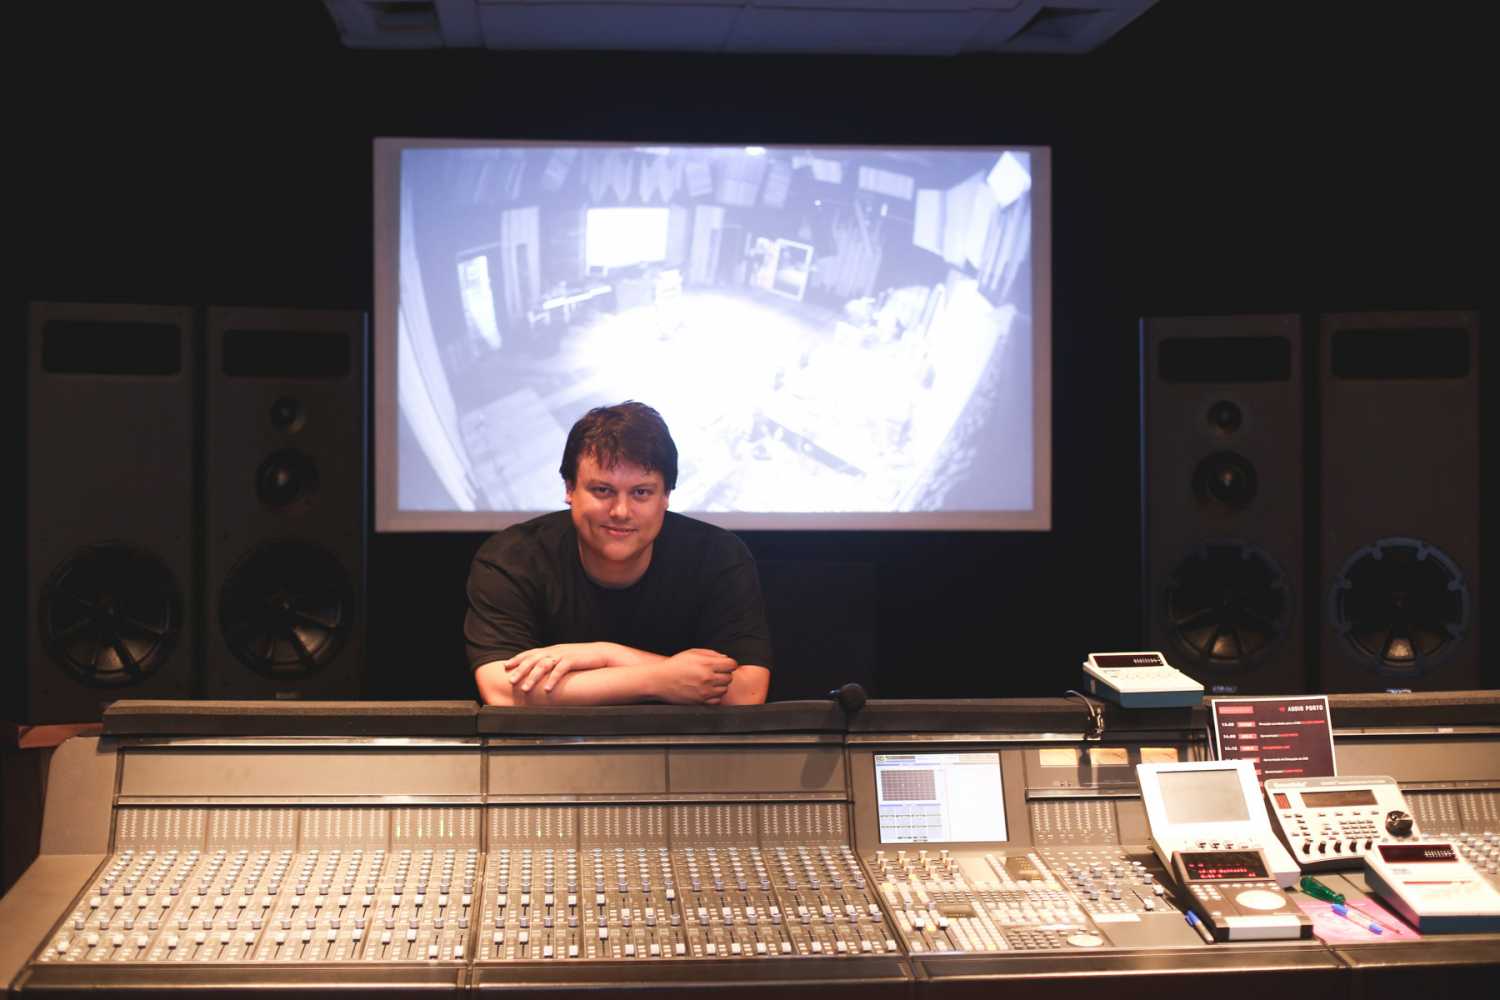 Rafael Hauck in his new studio, Audio Porto